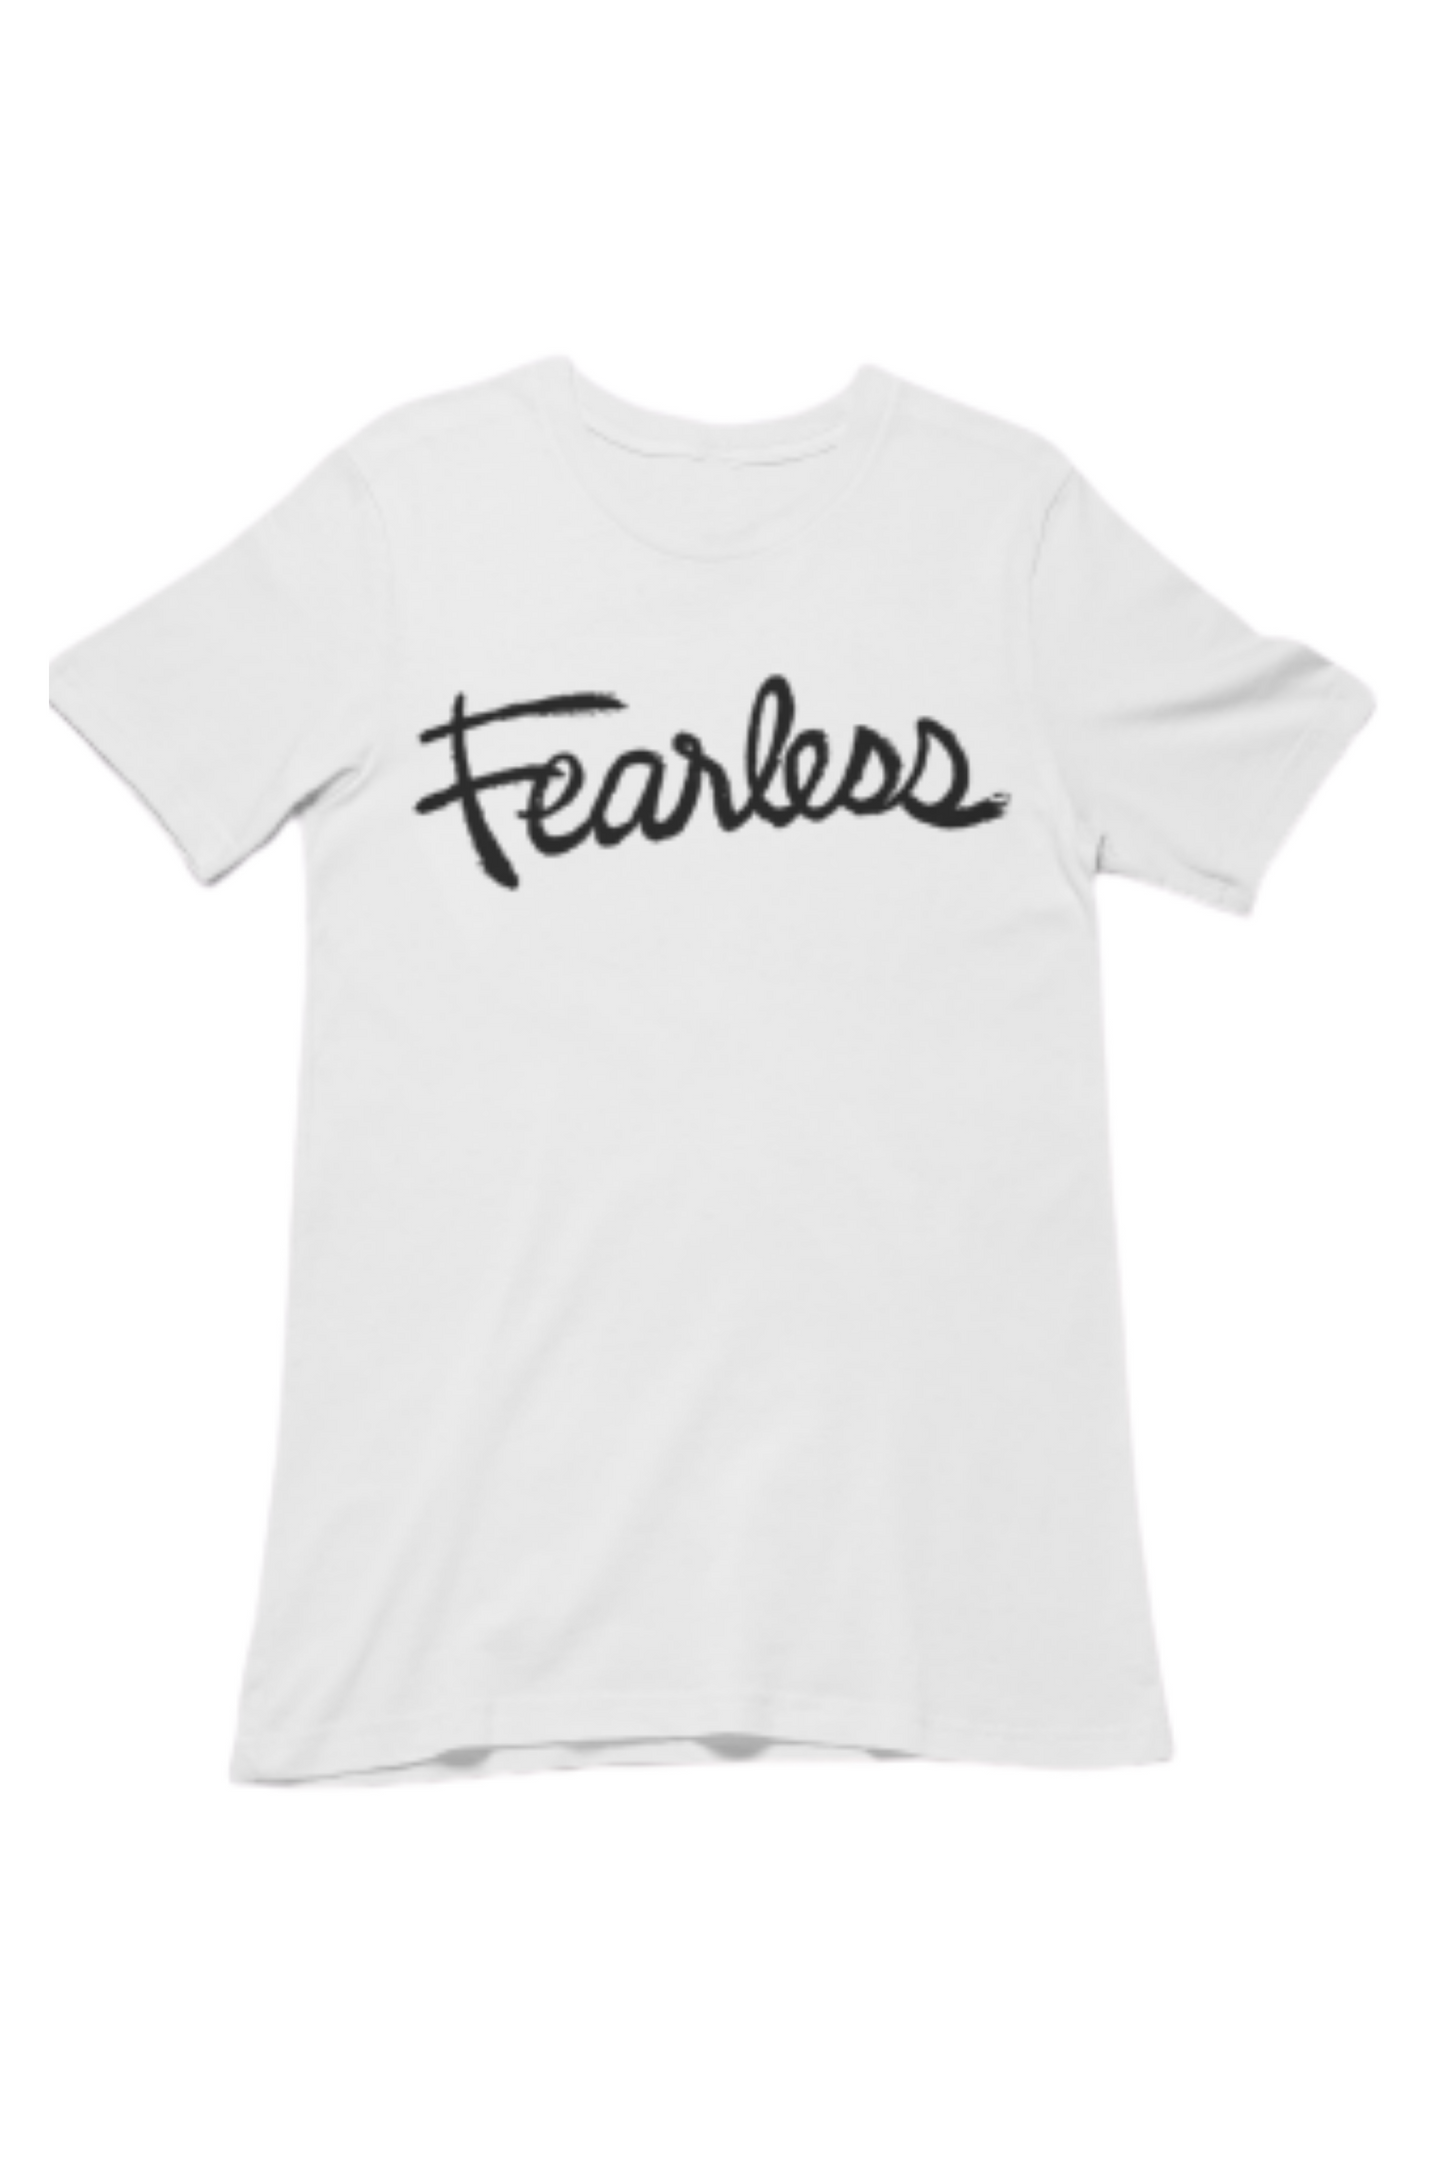 Fearless White T-Shirt